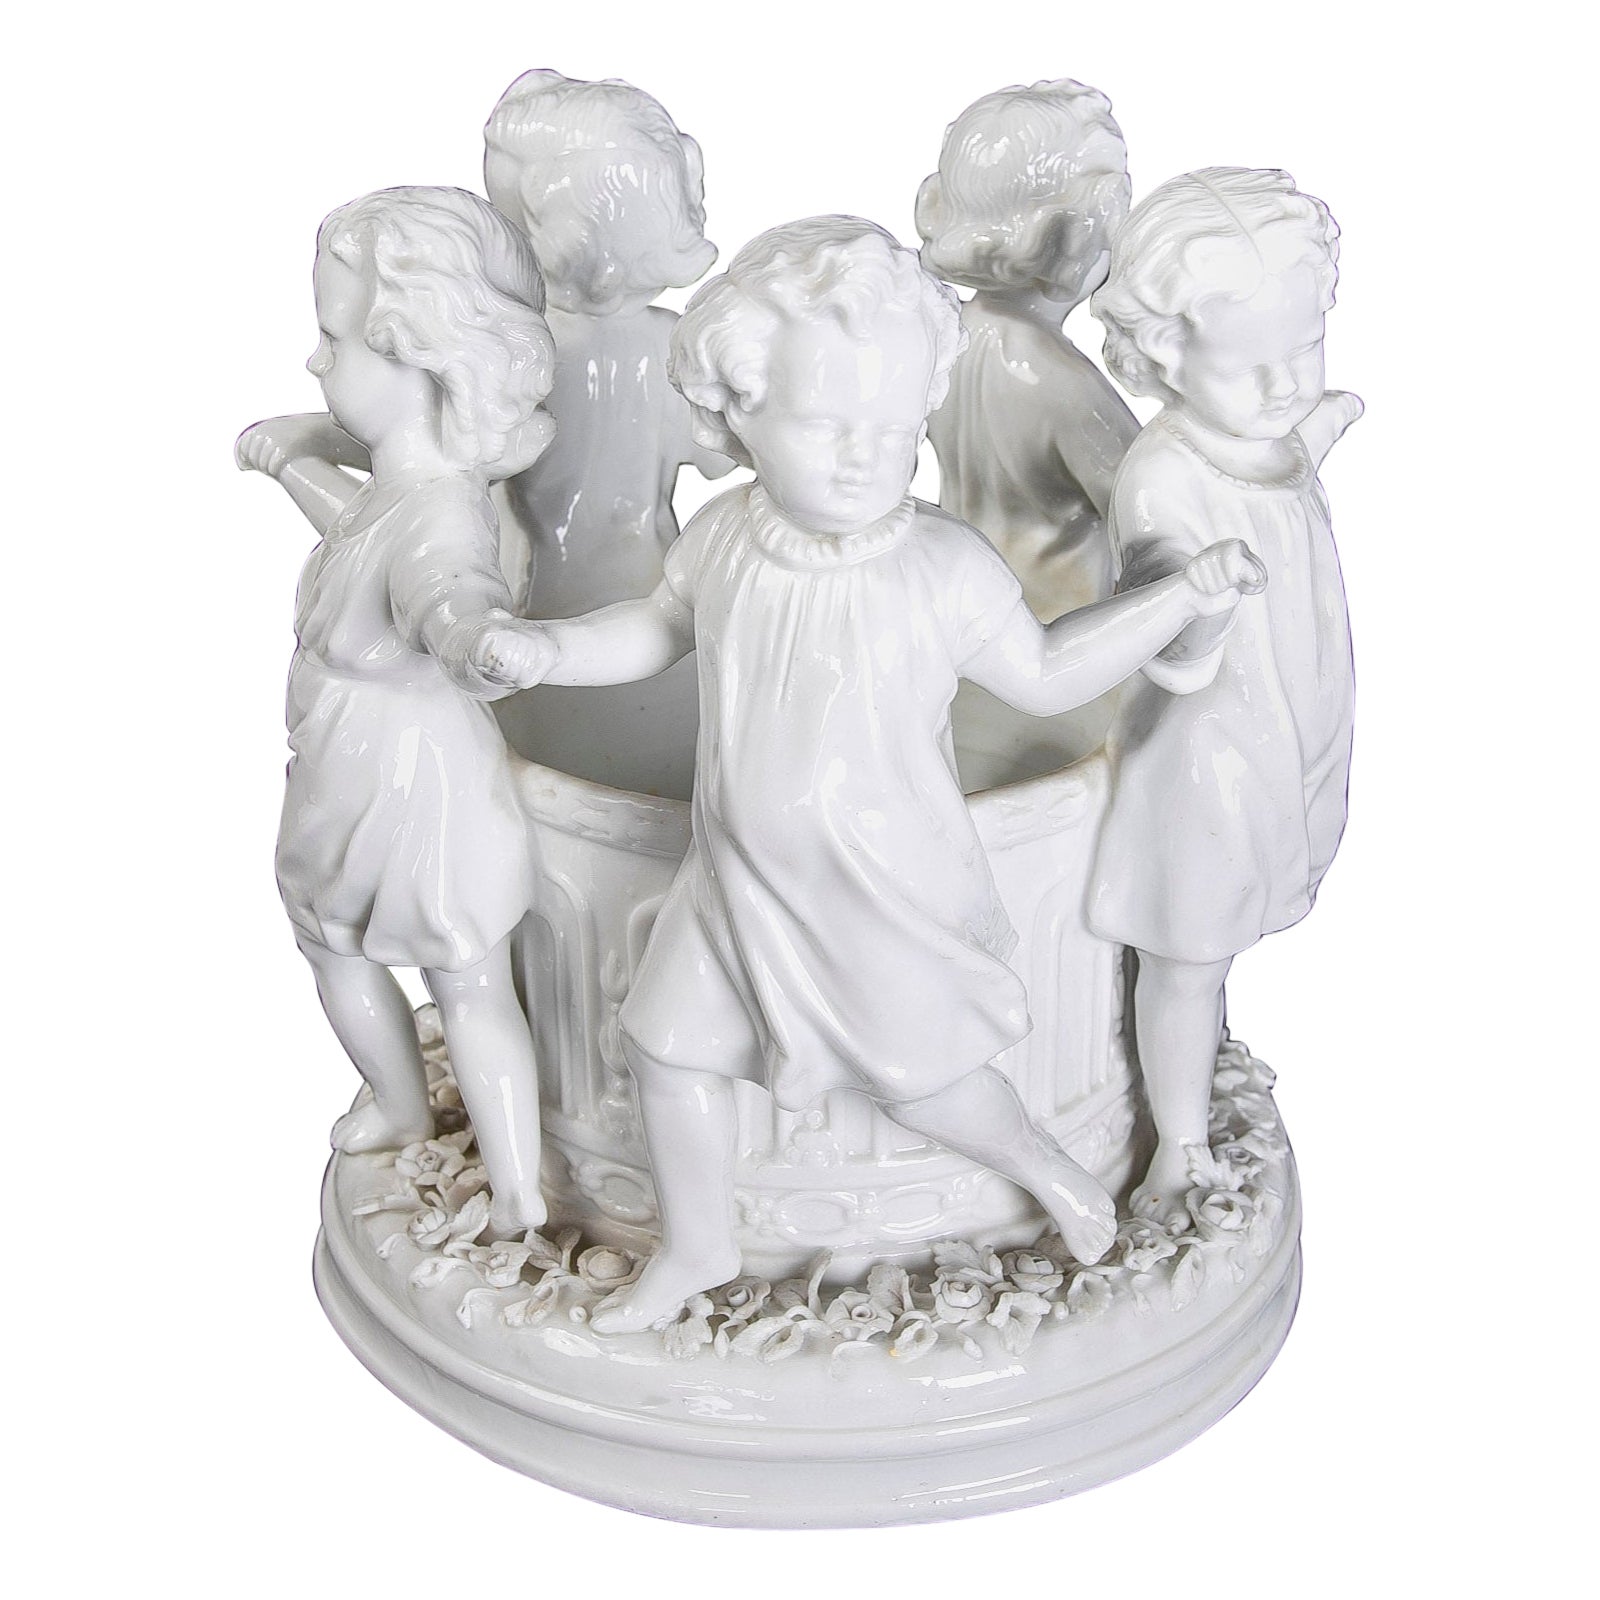 19th Century Austrian Porcelain Sculptural Set in White with Children